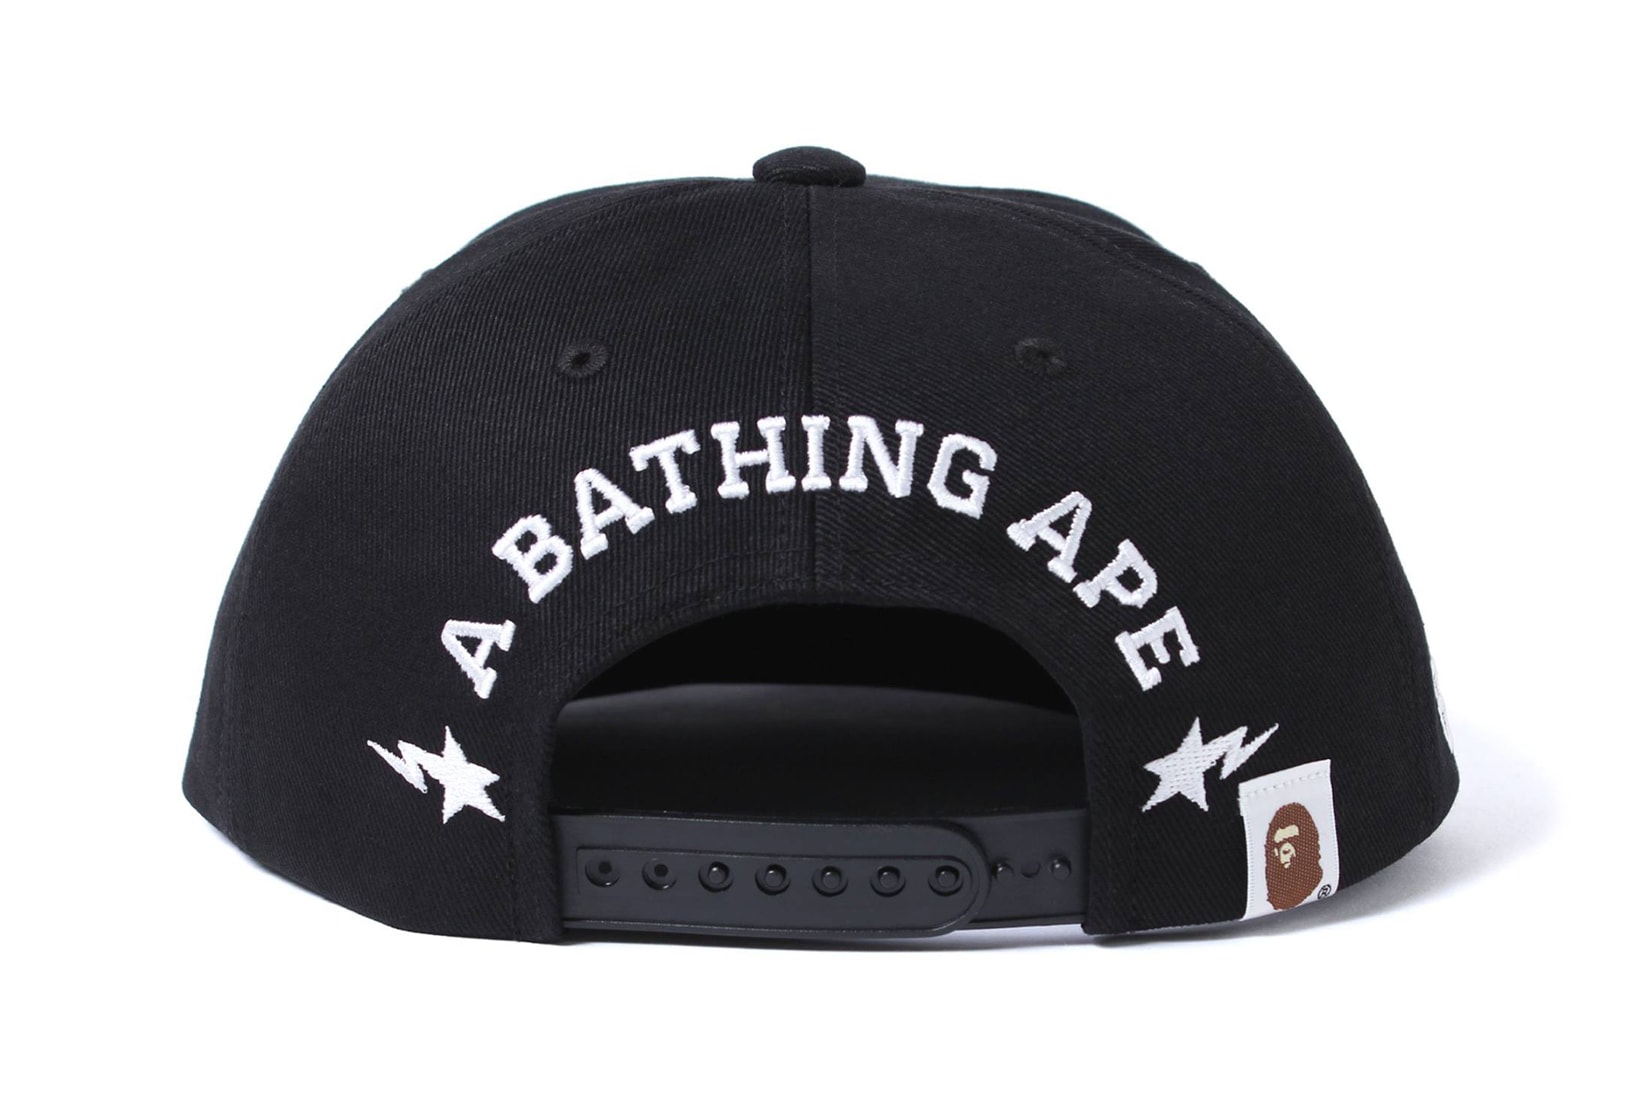 BAPE A Bathing Ape NYC New York City Snapback Camo Hat Cap Black Purple Accessories Release Date Info September 2